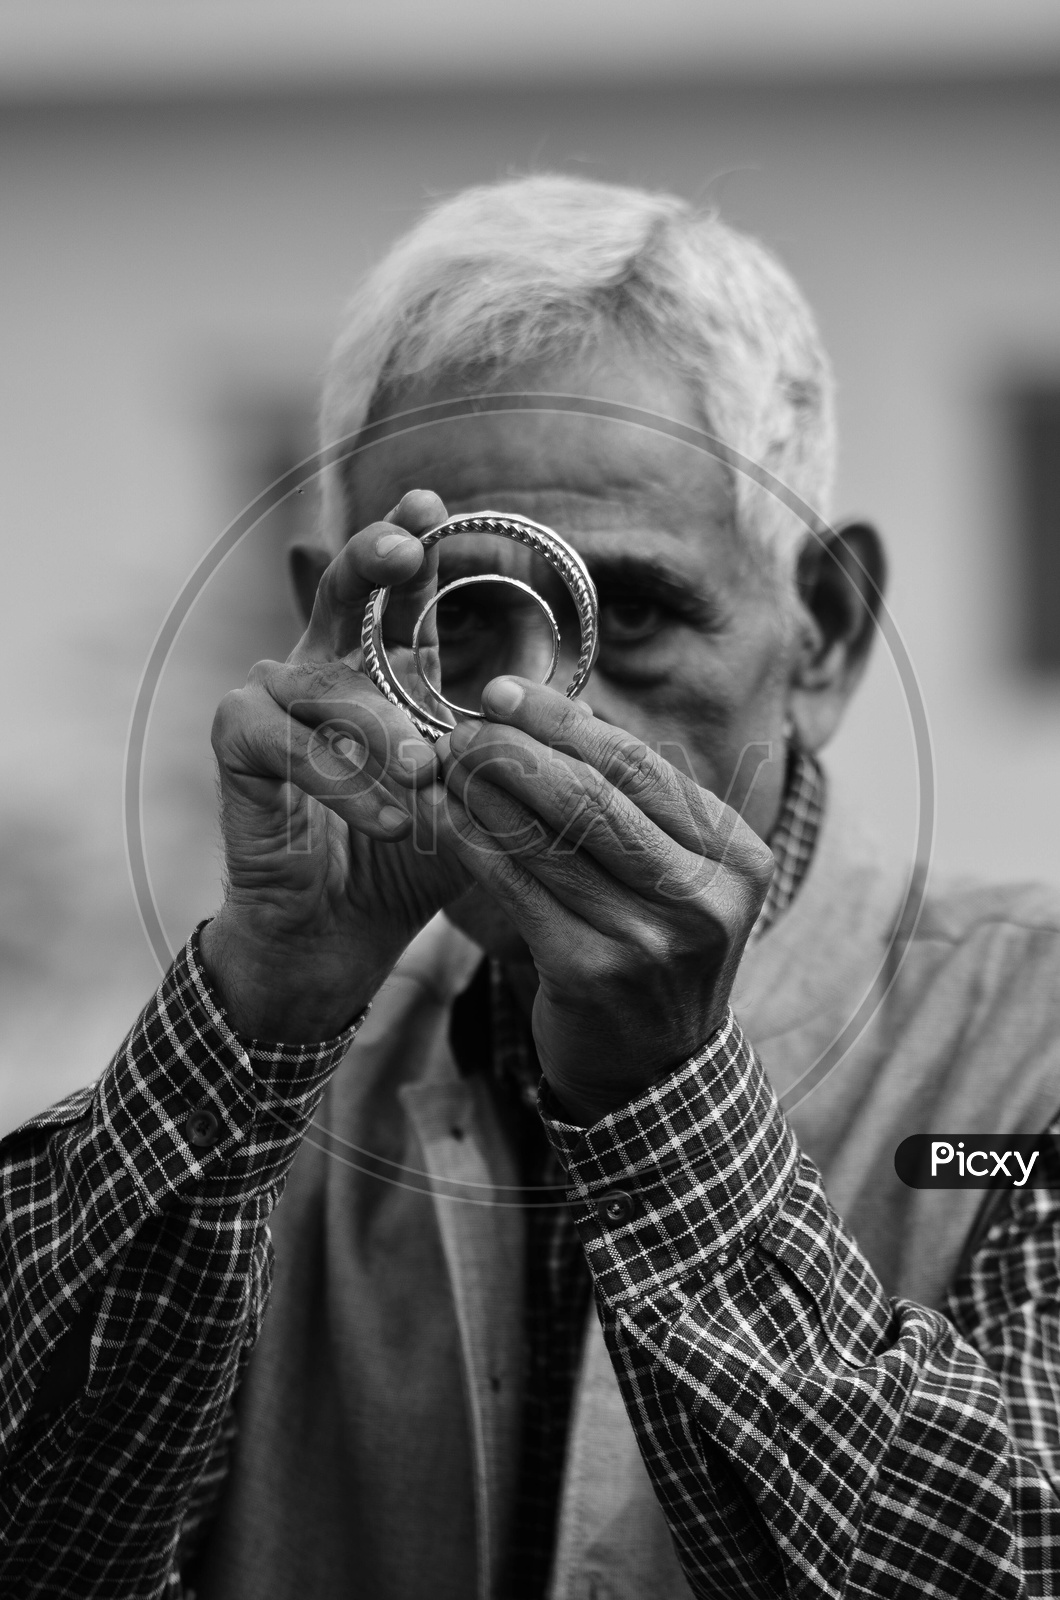 An old Indian man holding metal bangles